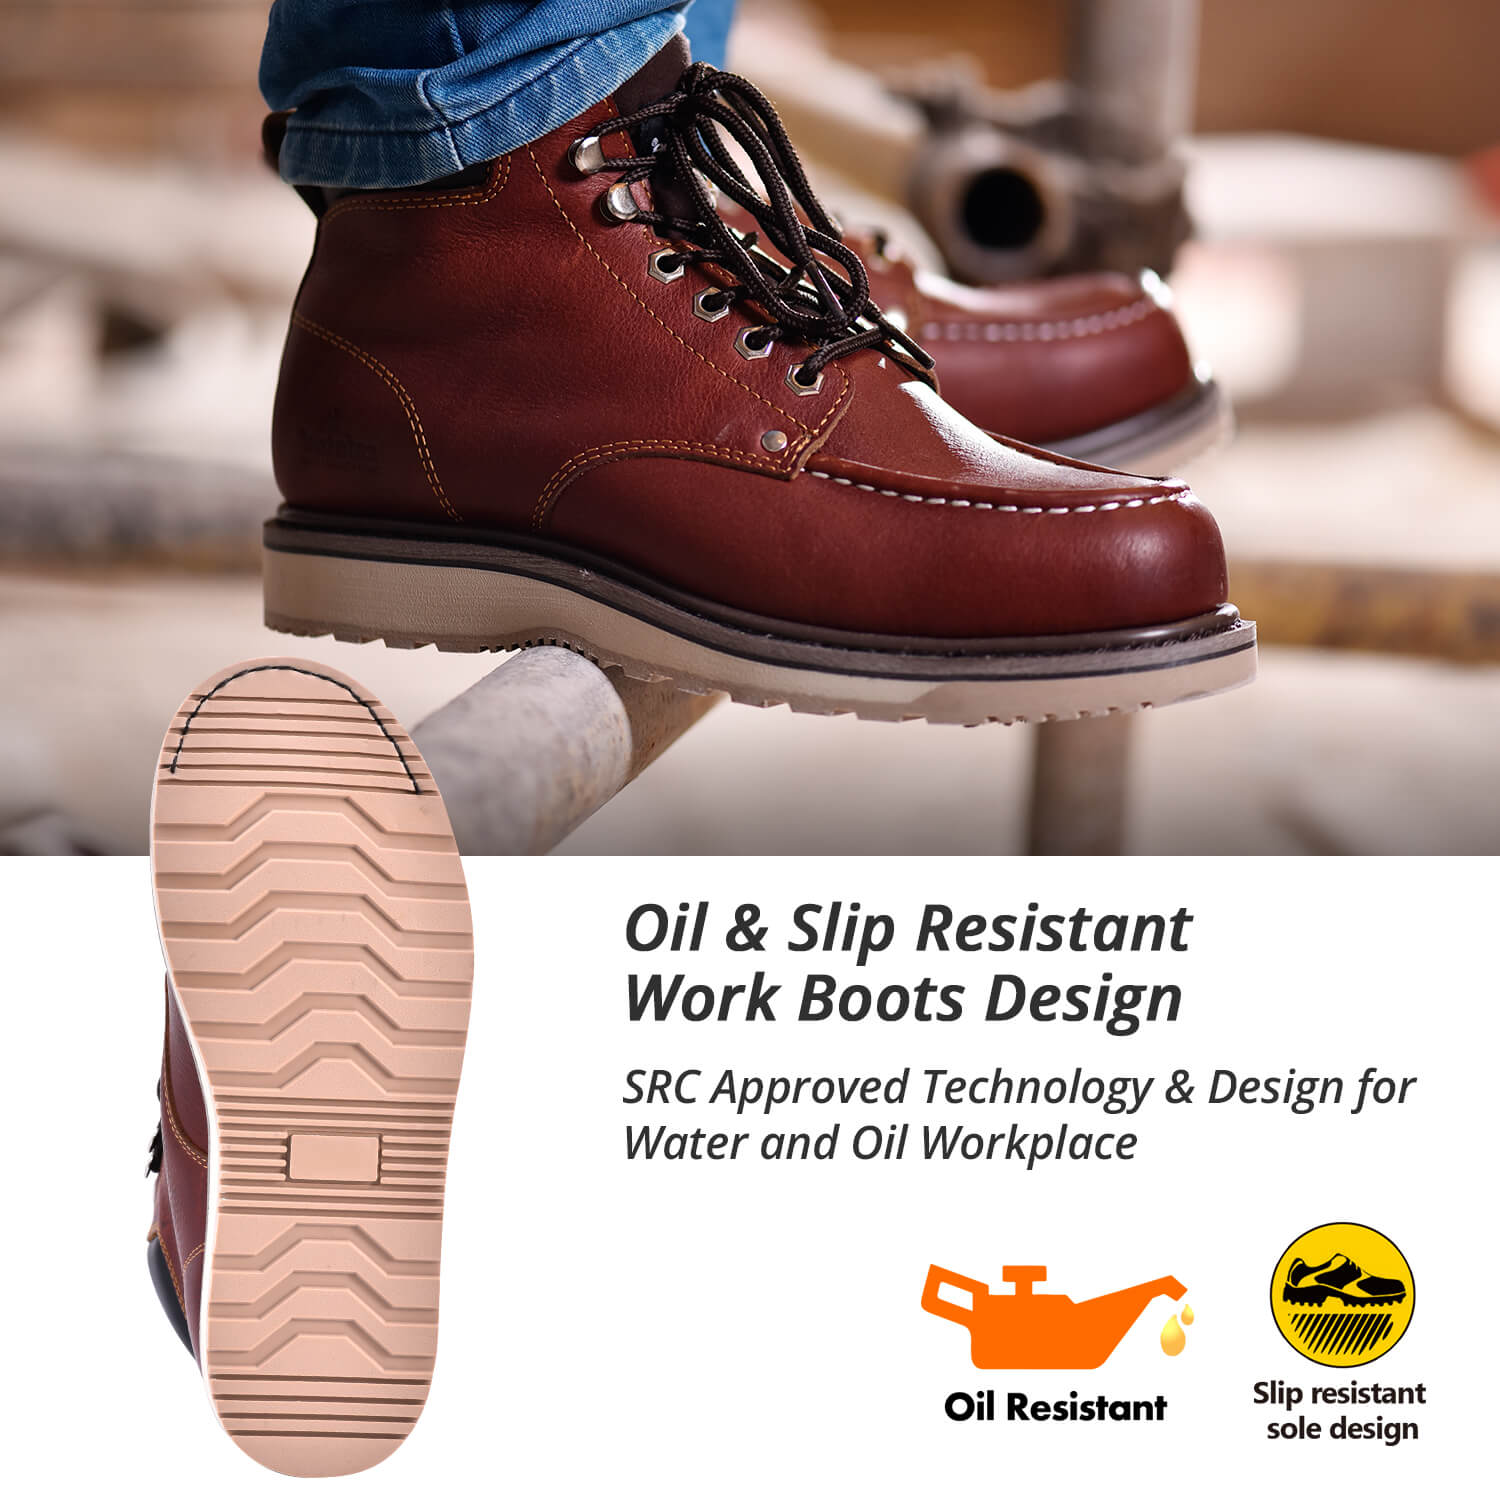 Safetoe Genuine Leather Soft Moc Toe Safety Work Boots